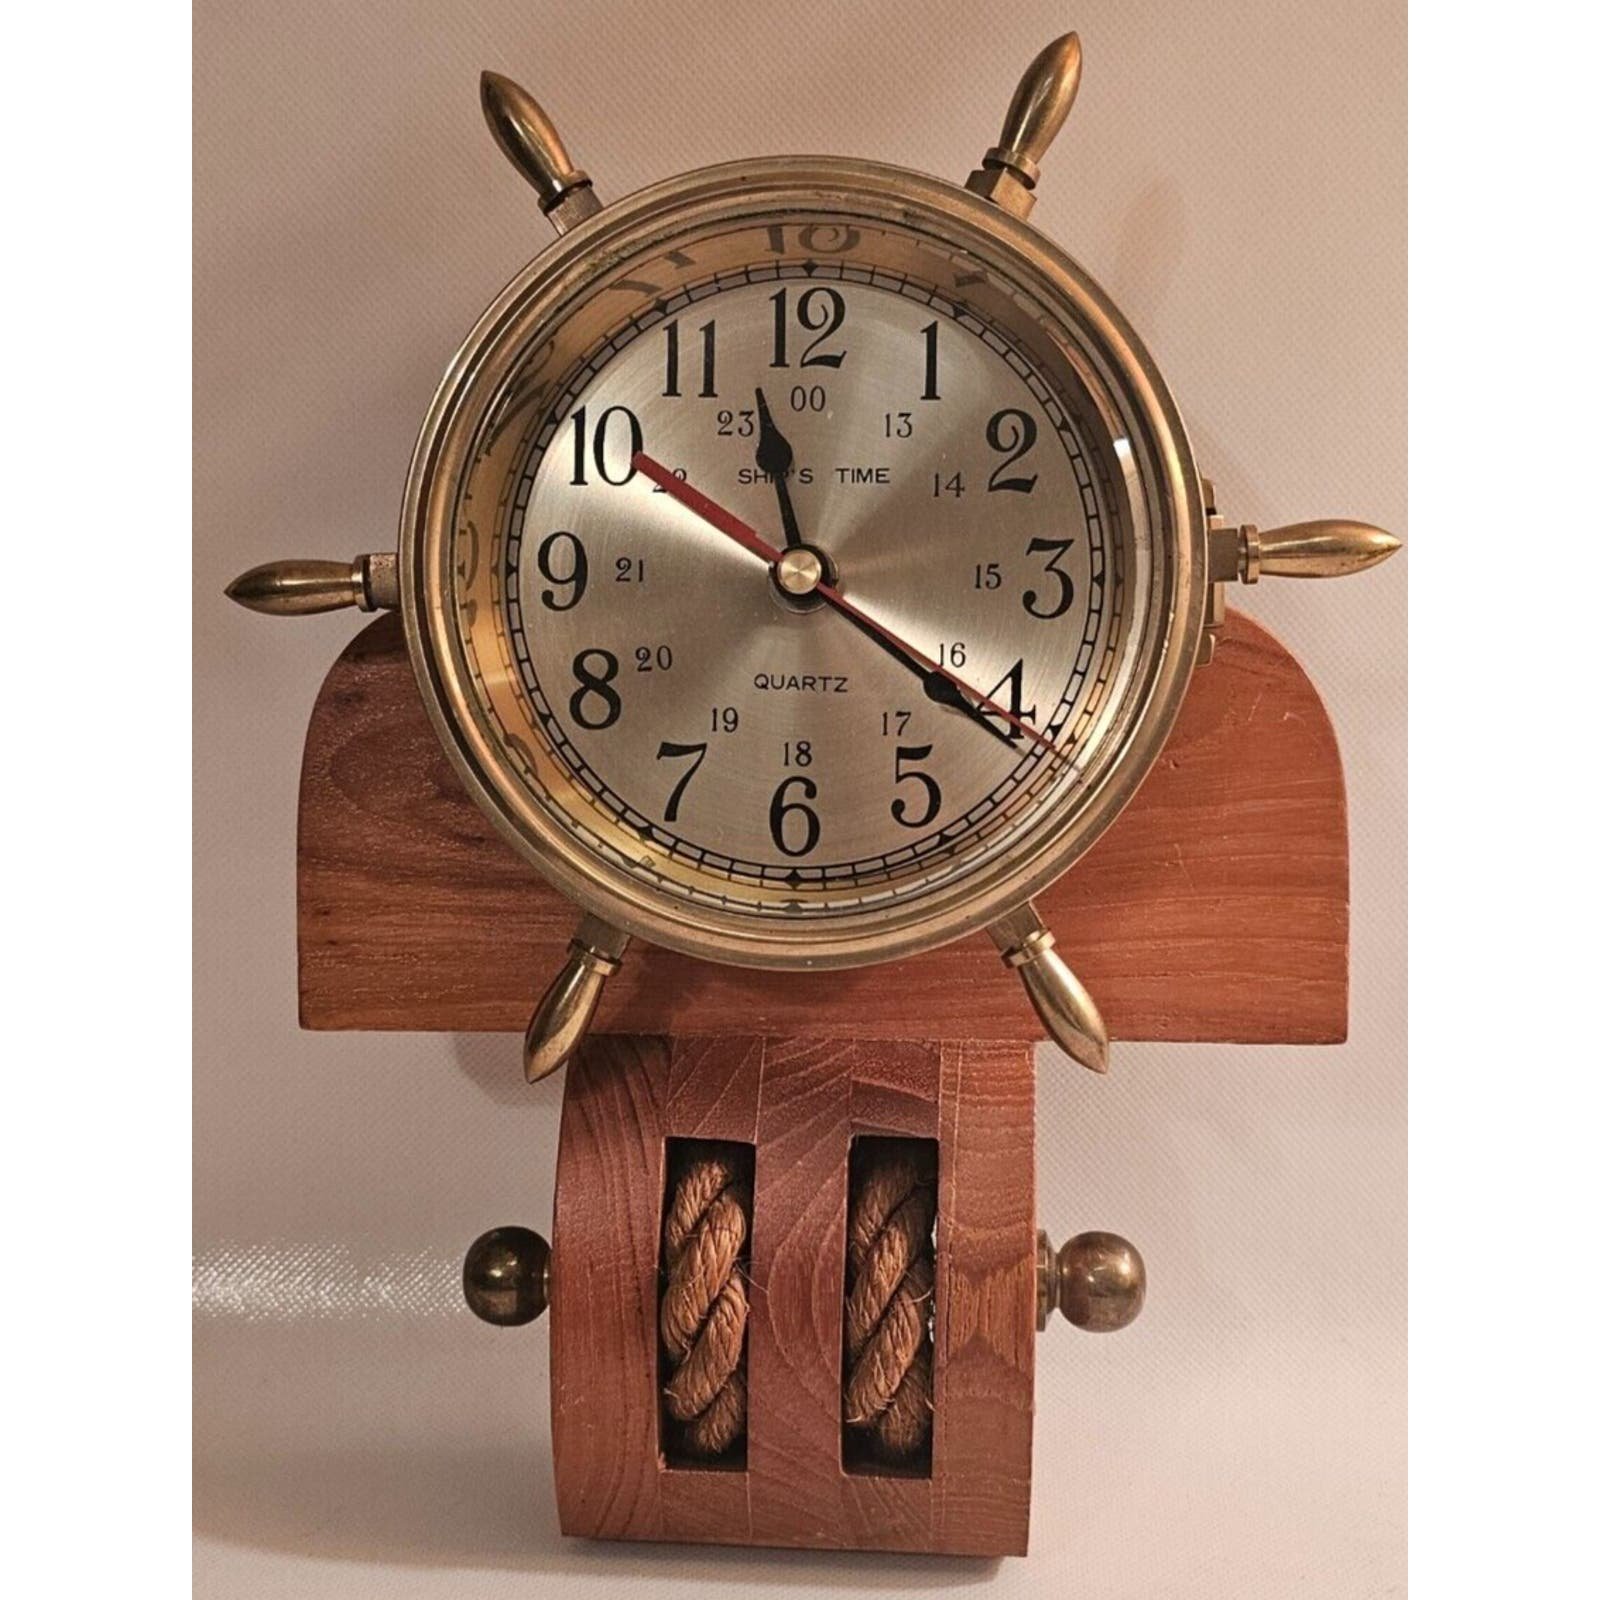 Working Brass Ship Wheel Mantel Clock With Rope hjbRDYigX